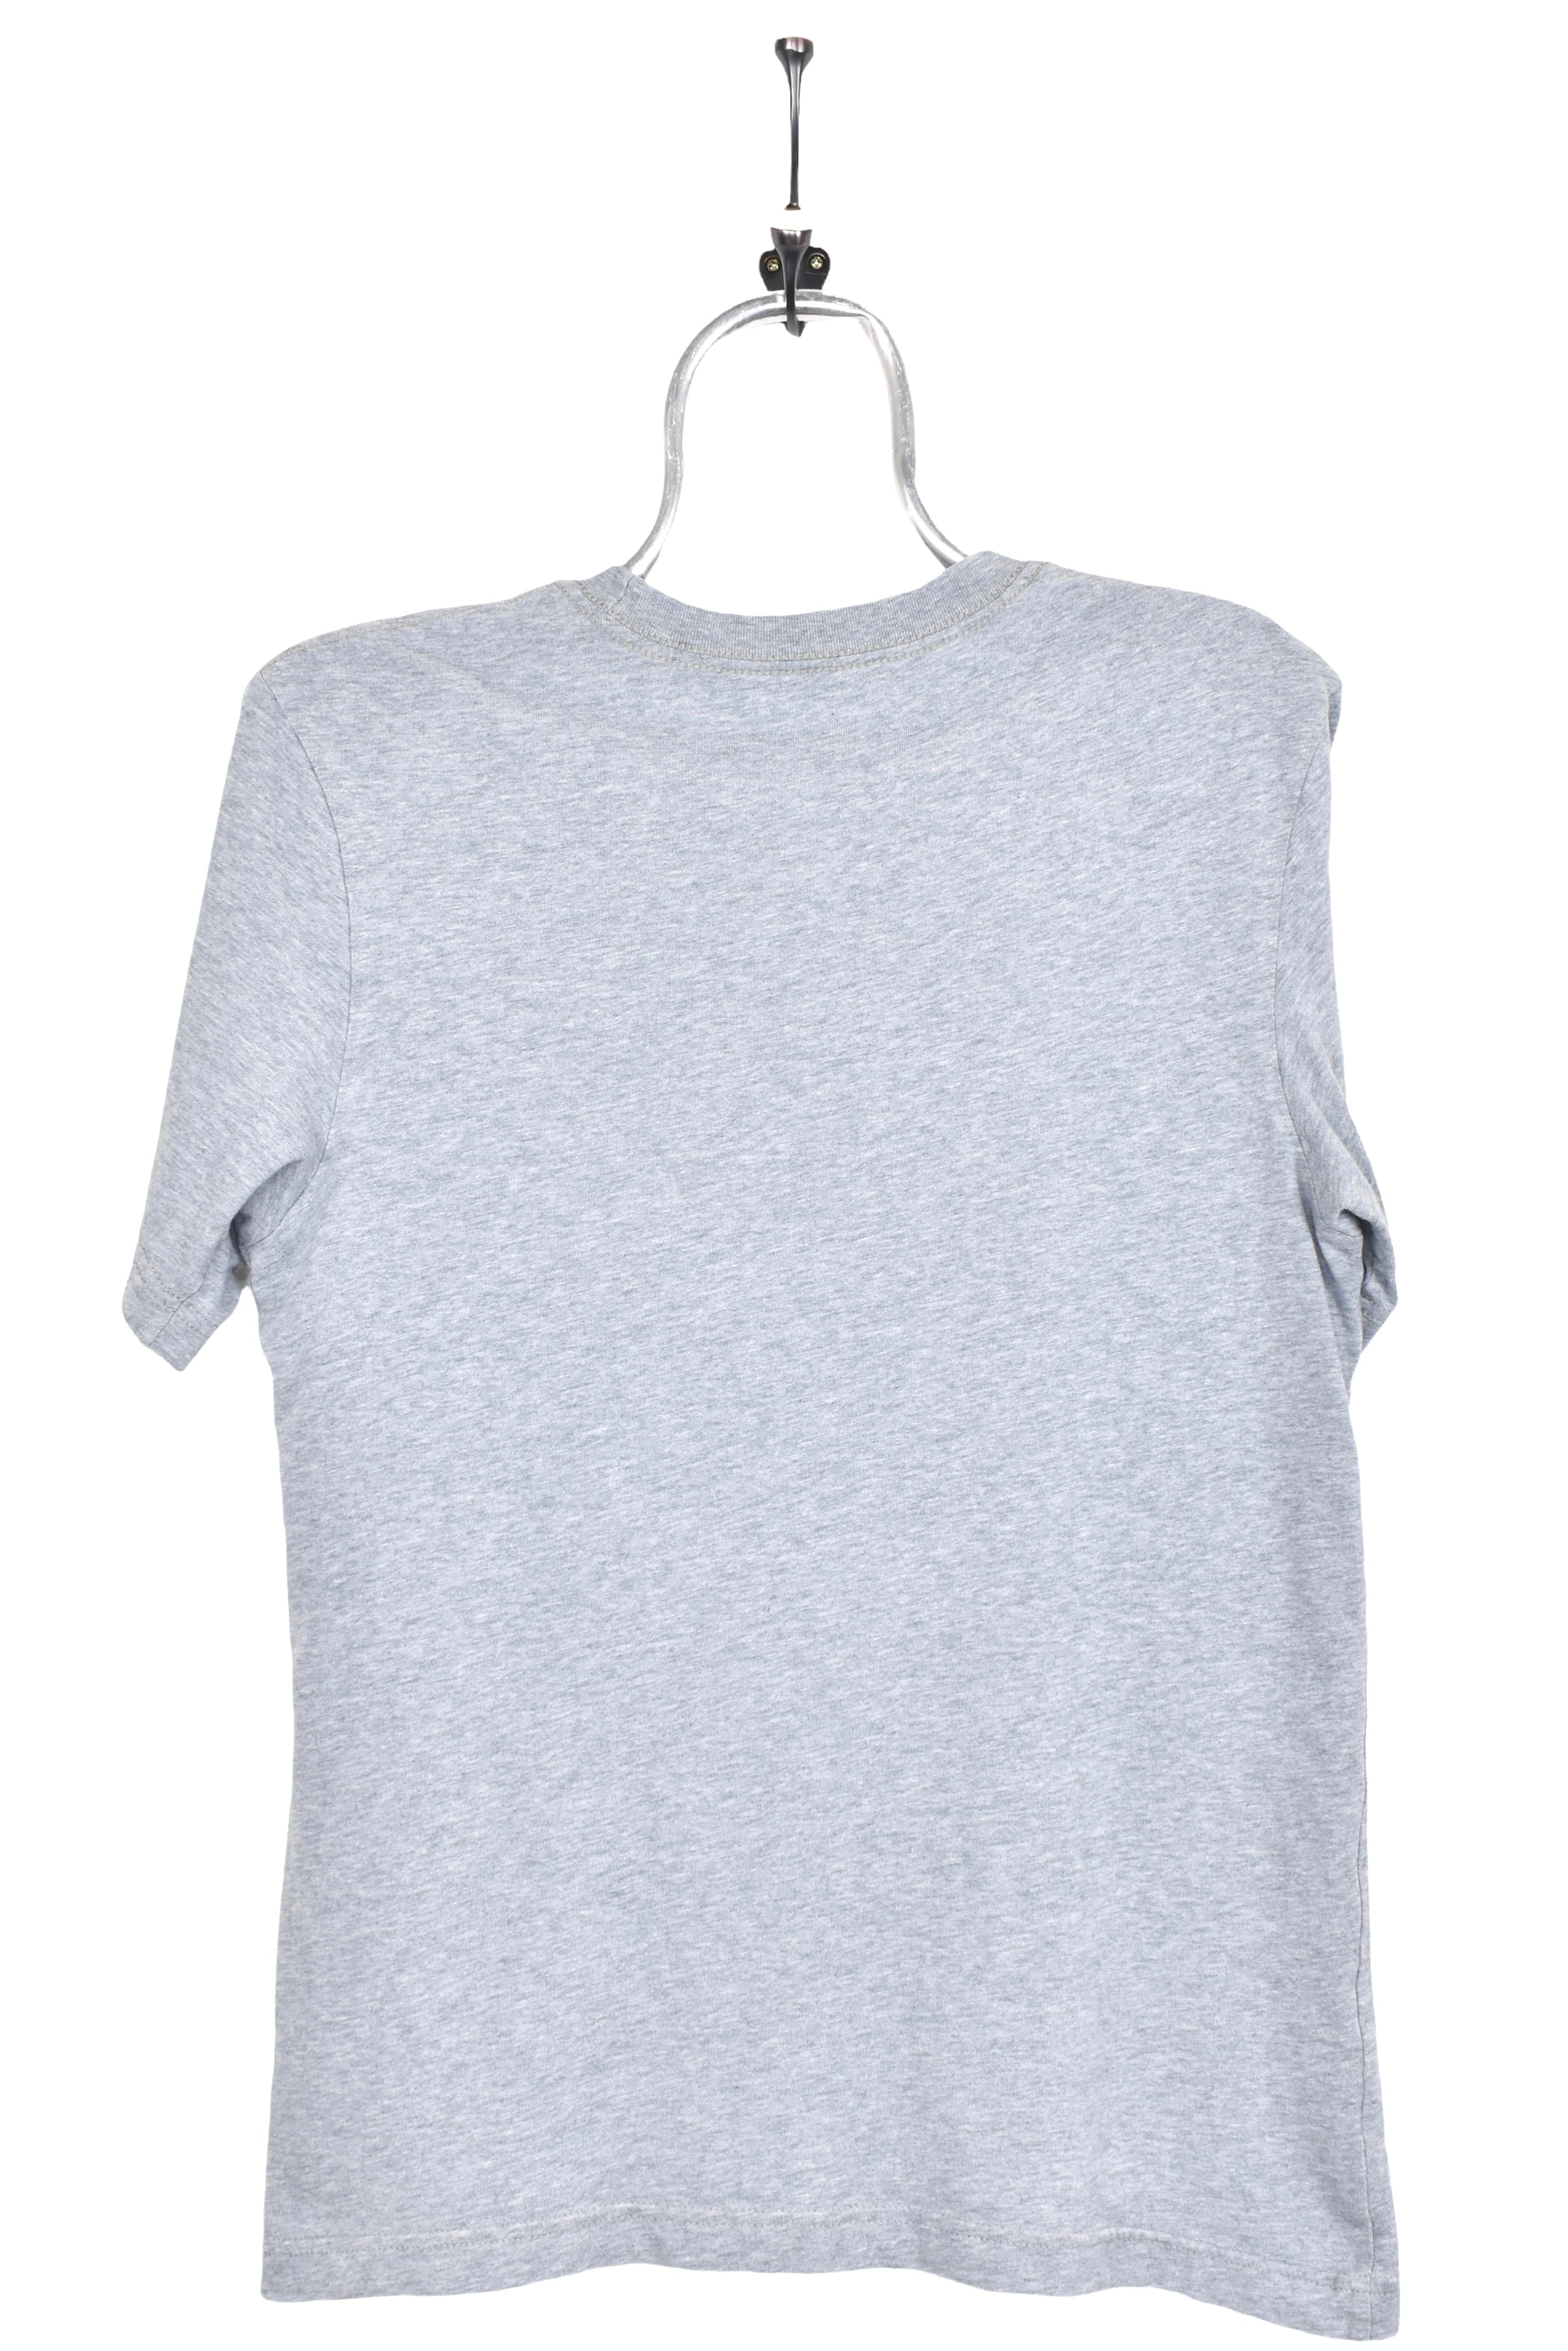 Women's vintage Nike shirt, grey embroidered tee - AU Medium NIKE